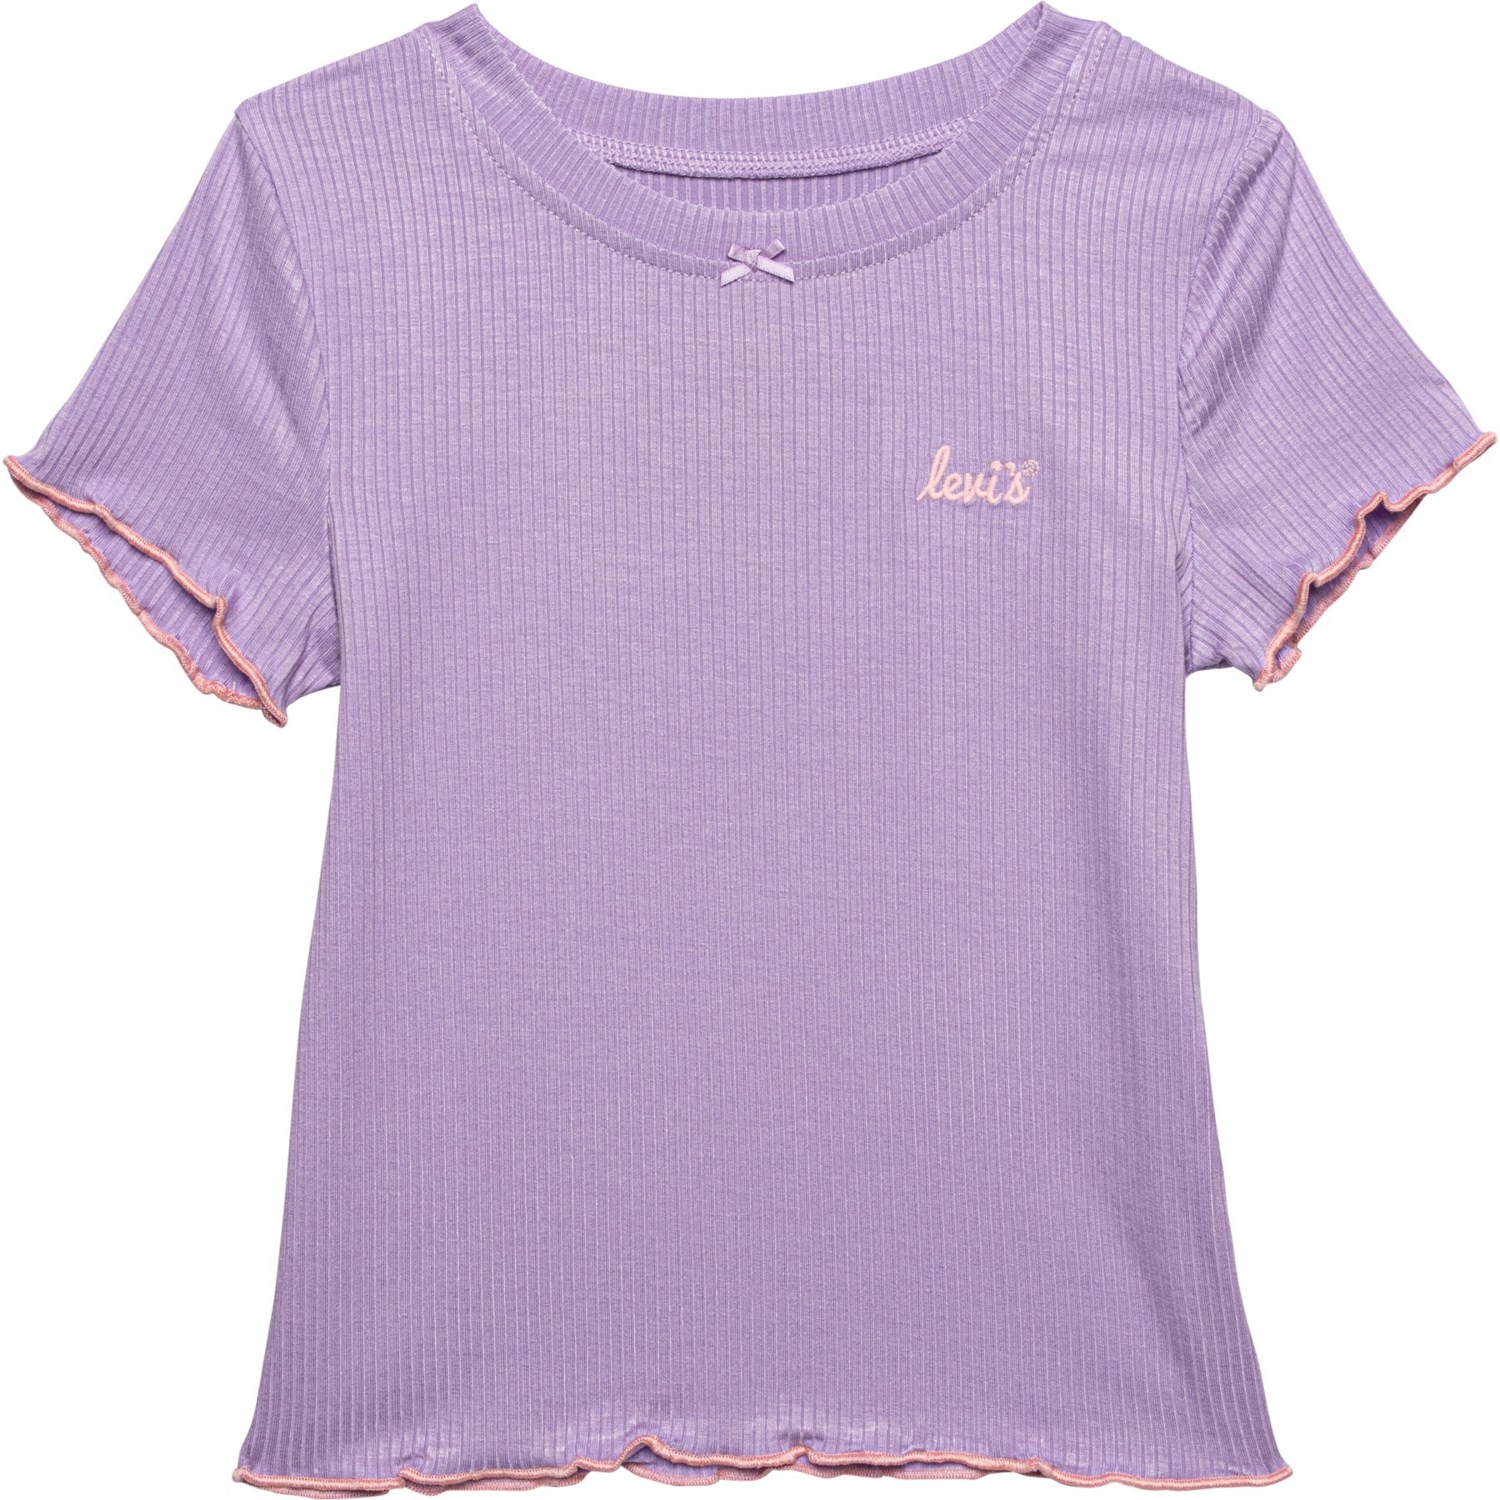 Levis Little Girls Ribbed Fashion Shirt - Short Sleeve